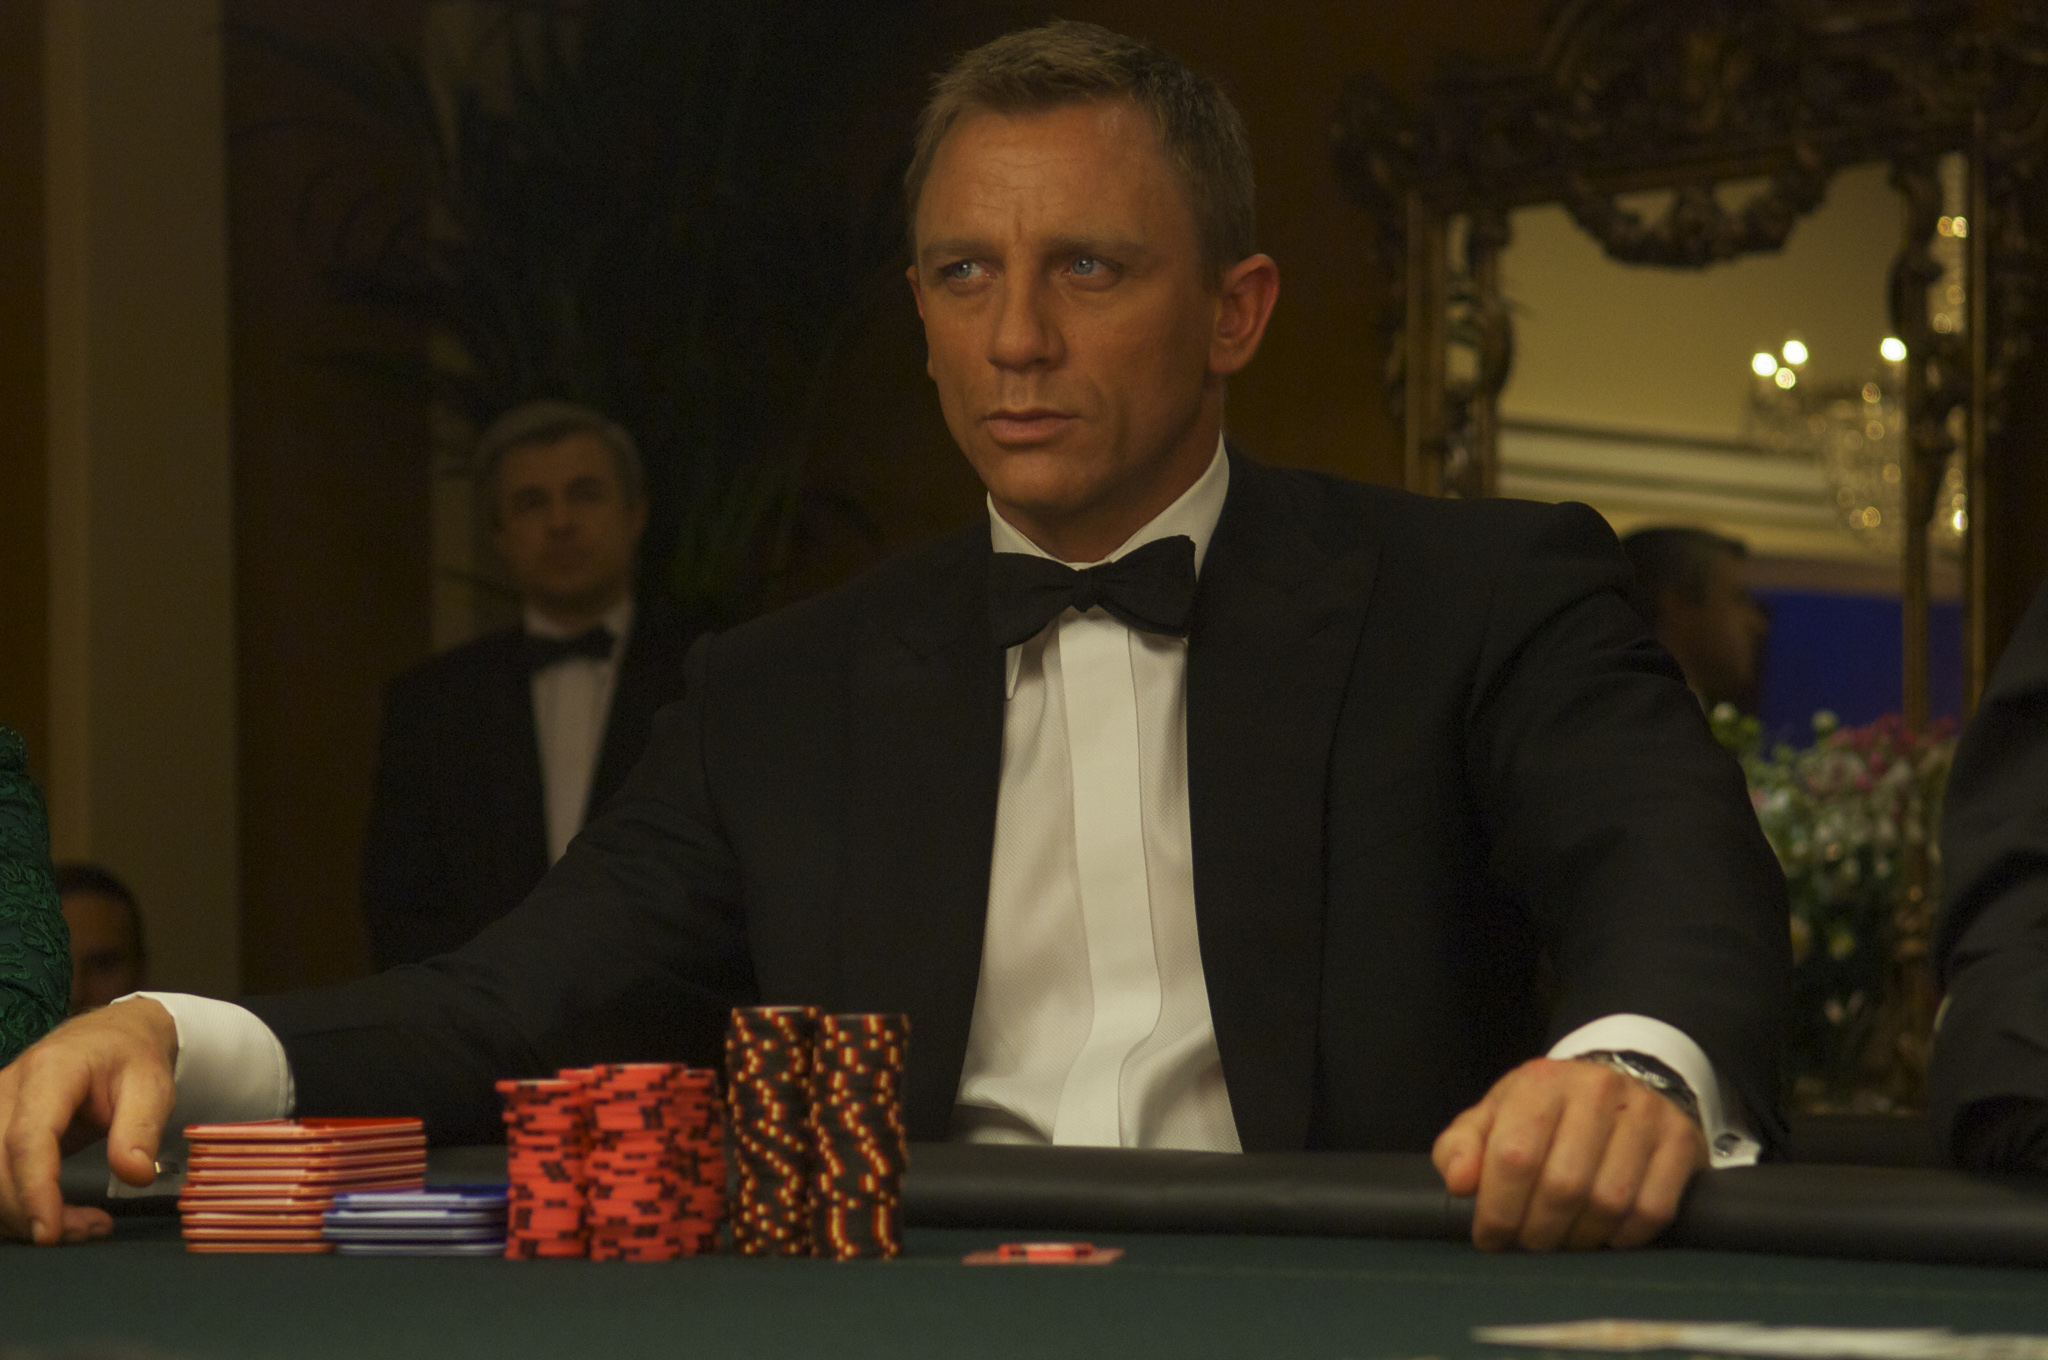 Daniel Craig as James Bond, sat at the casino table